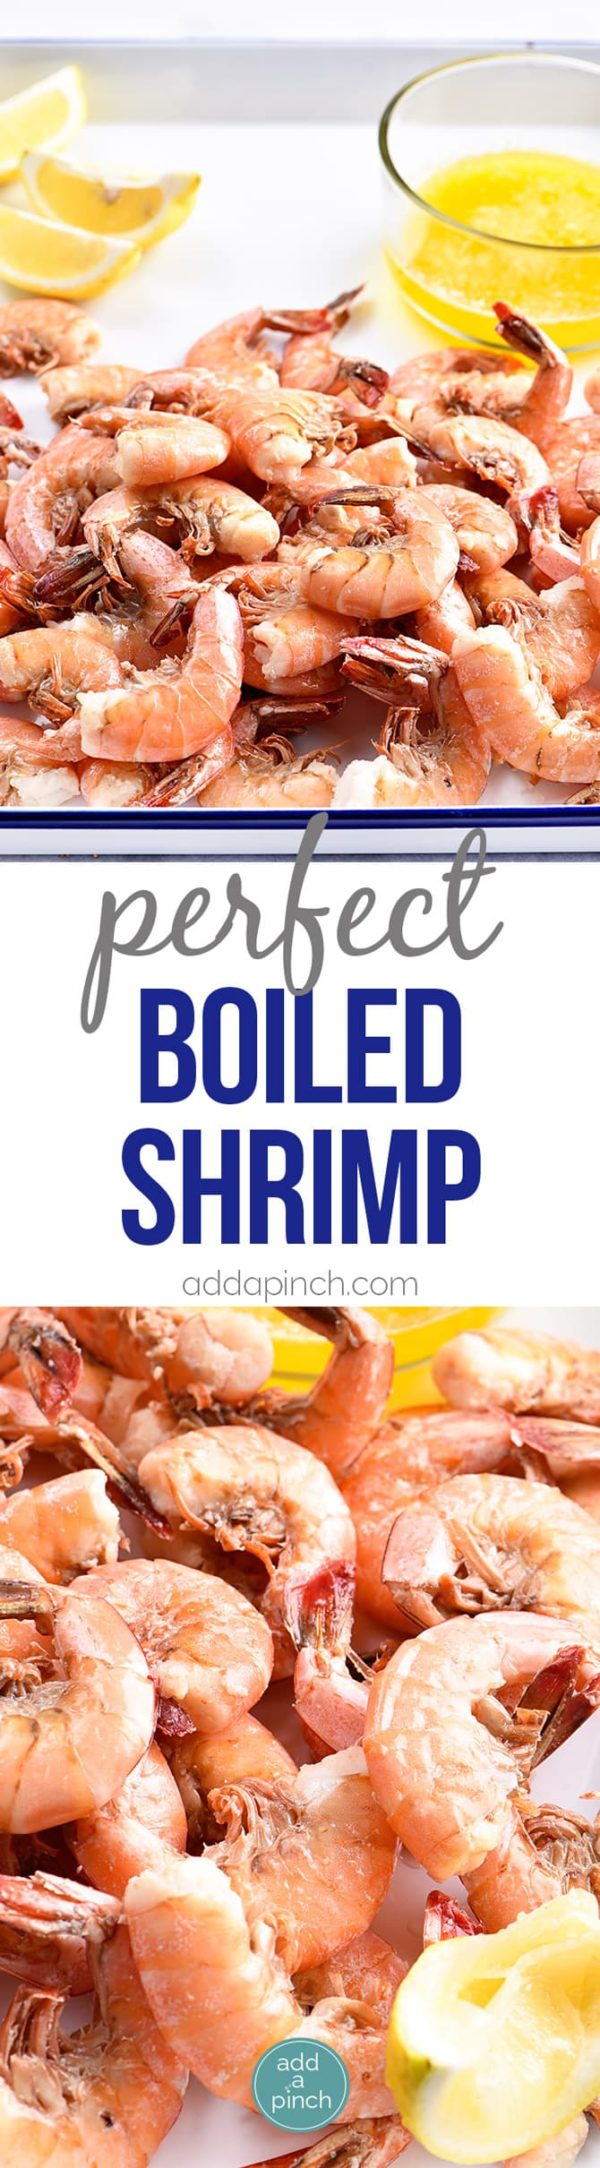 Boiled Shrimp Recipe - Add a Pinch